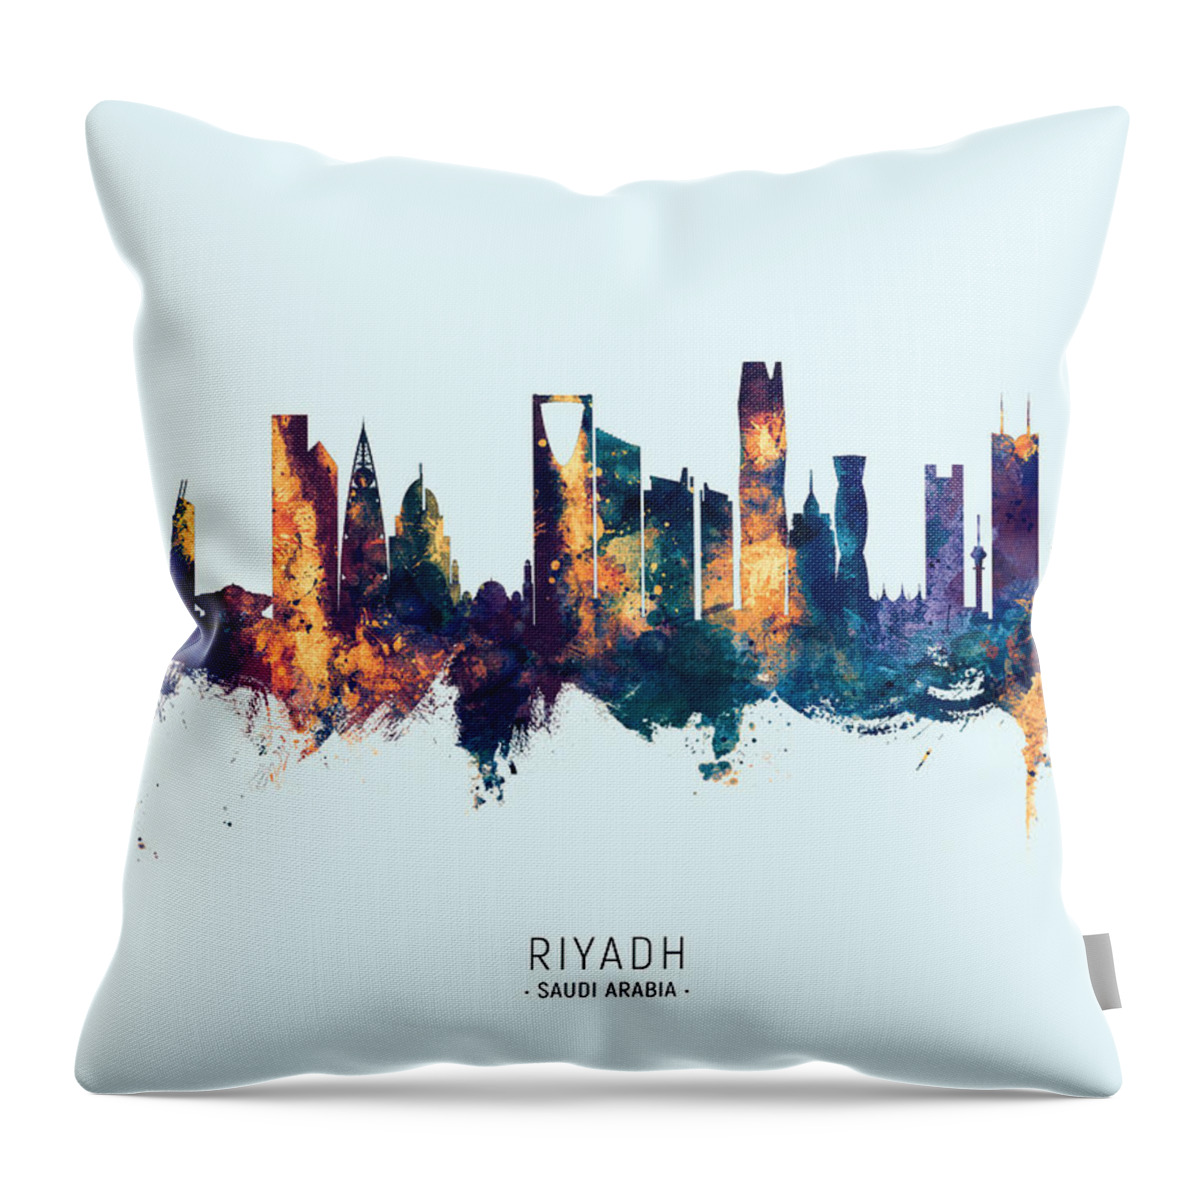 Riyadh Throw Pillow featuring the digital art Riyadh Saudi Arabia Skyline #10 by Michael Tompsett